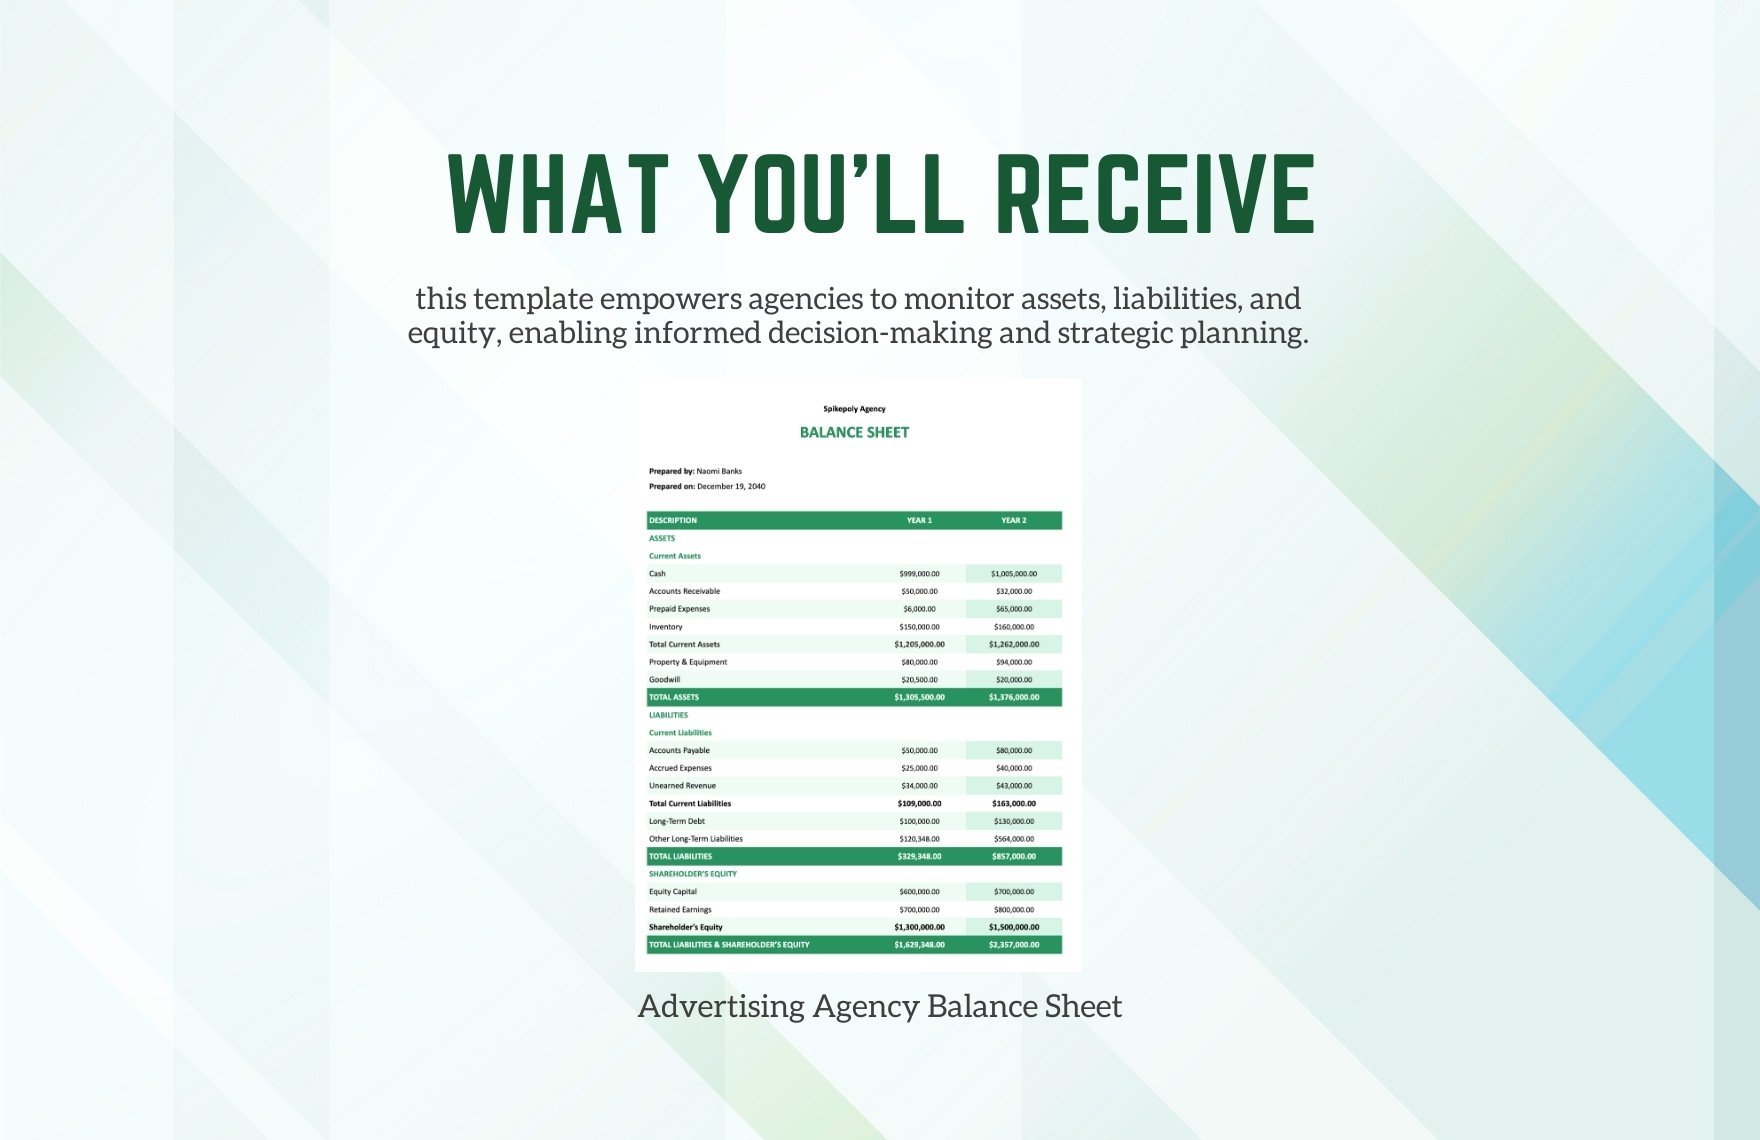 Advertising Agency Balance Sheet Template